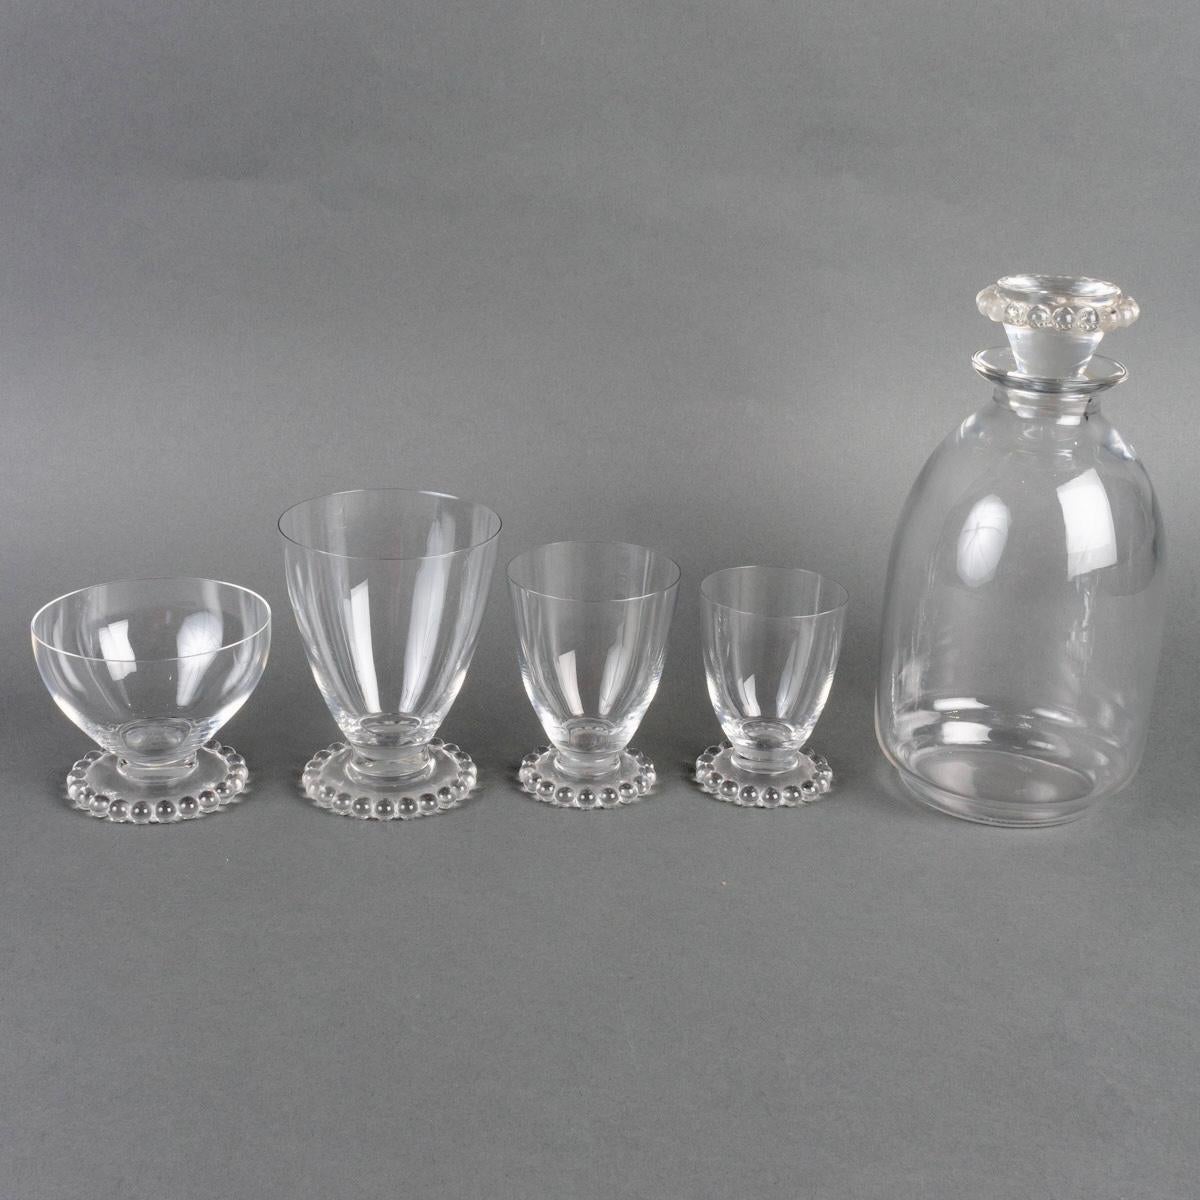 French 1935 René Lalique, Tablewares Glasses Decanters Boules Glass, 34 Pieces For Sale